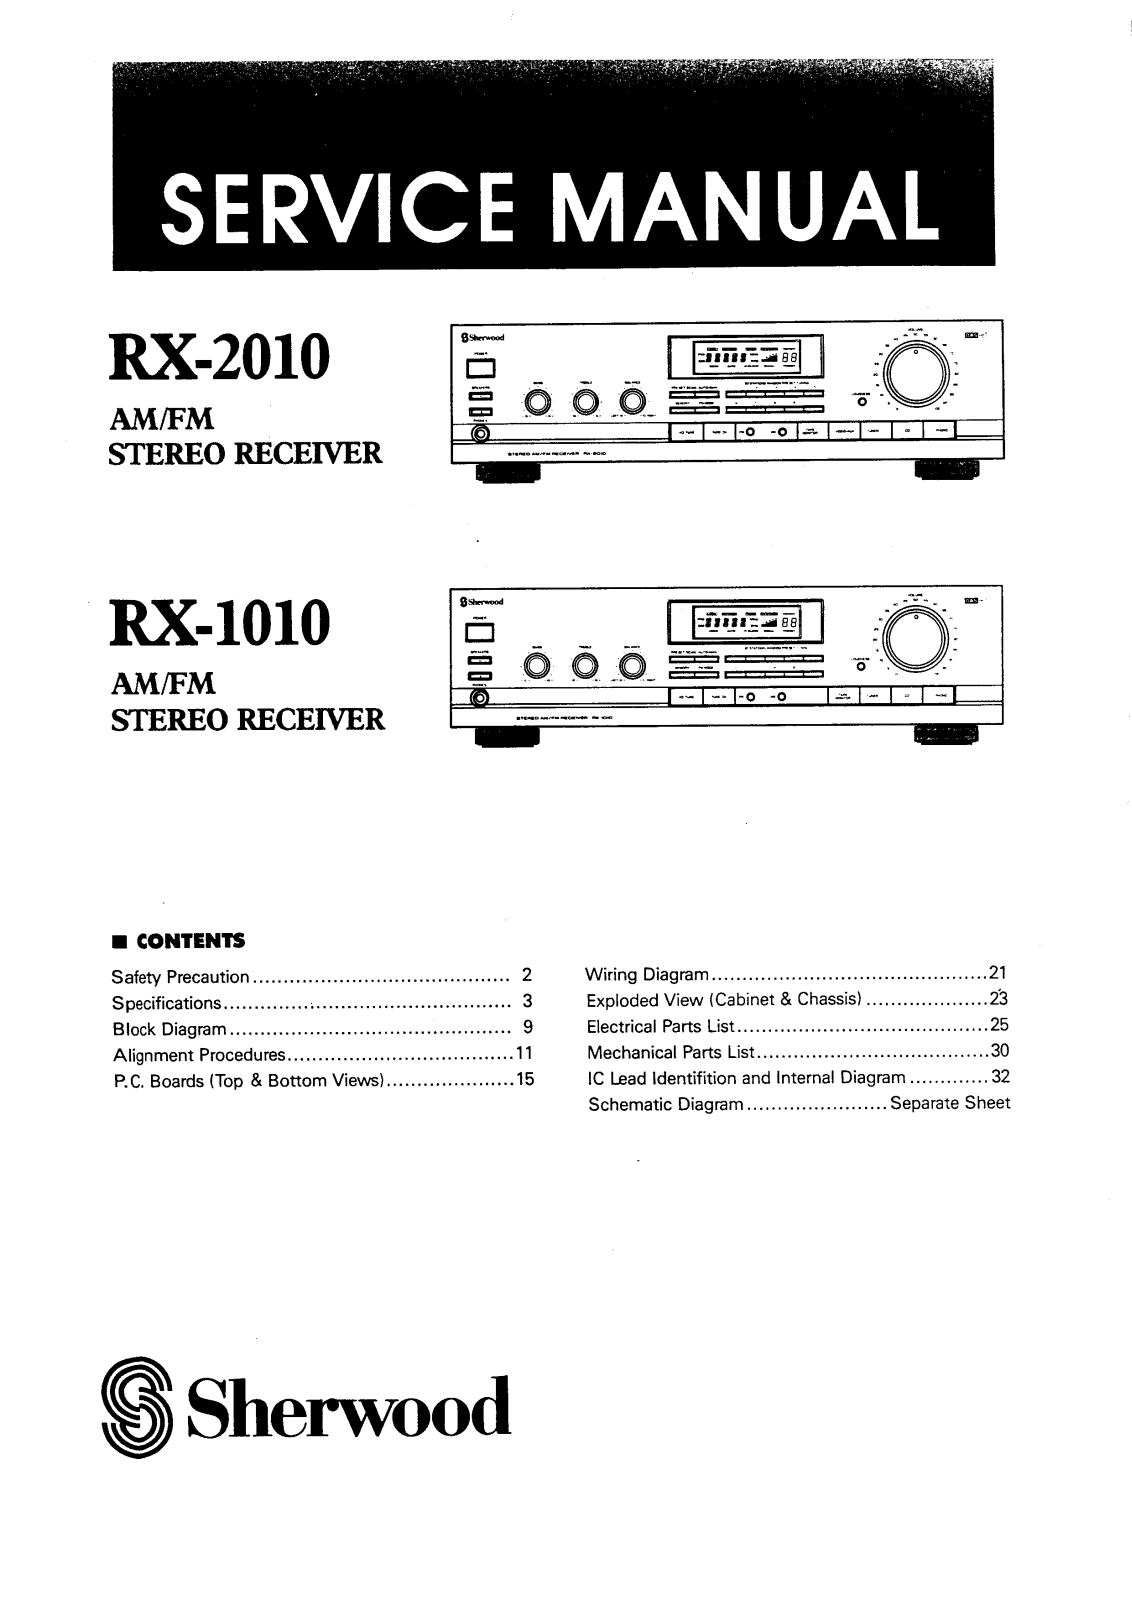 Sherwood RX-1010, RX-2010 Service manual